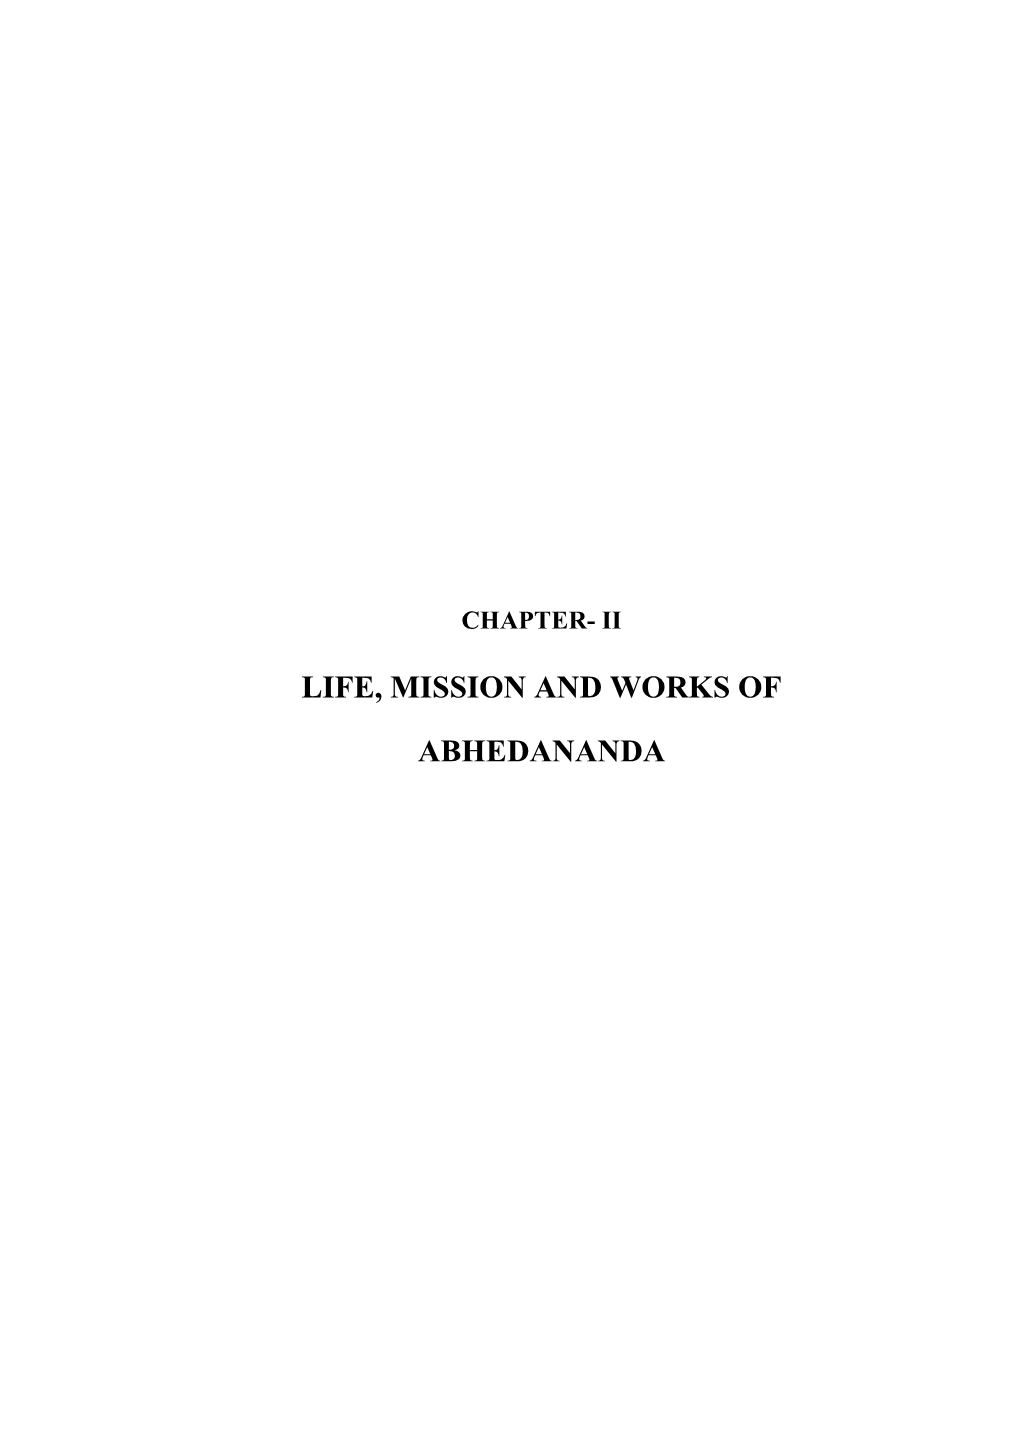 Life, Mission and Works of Abhedananda